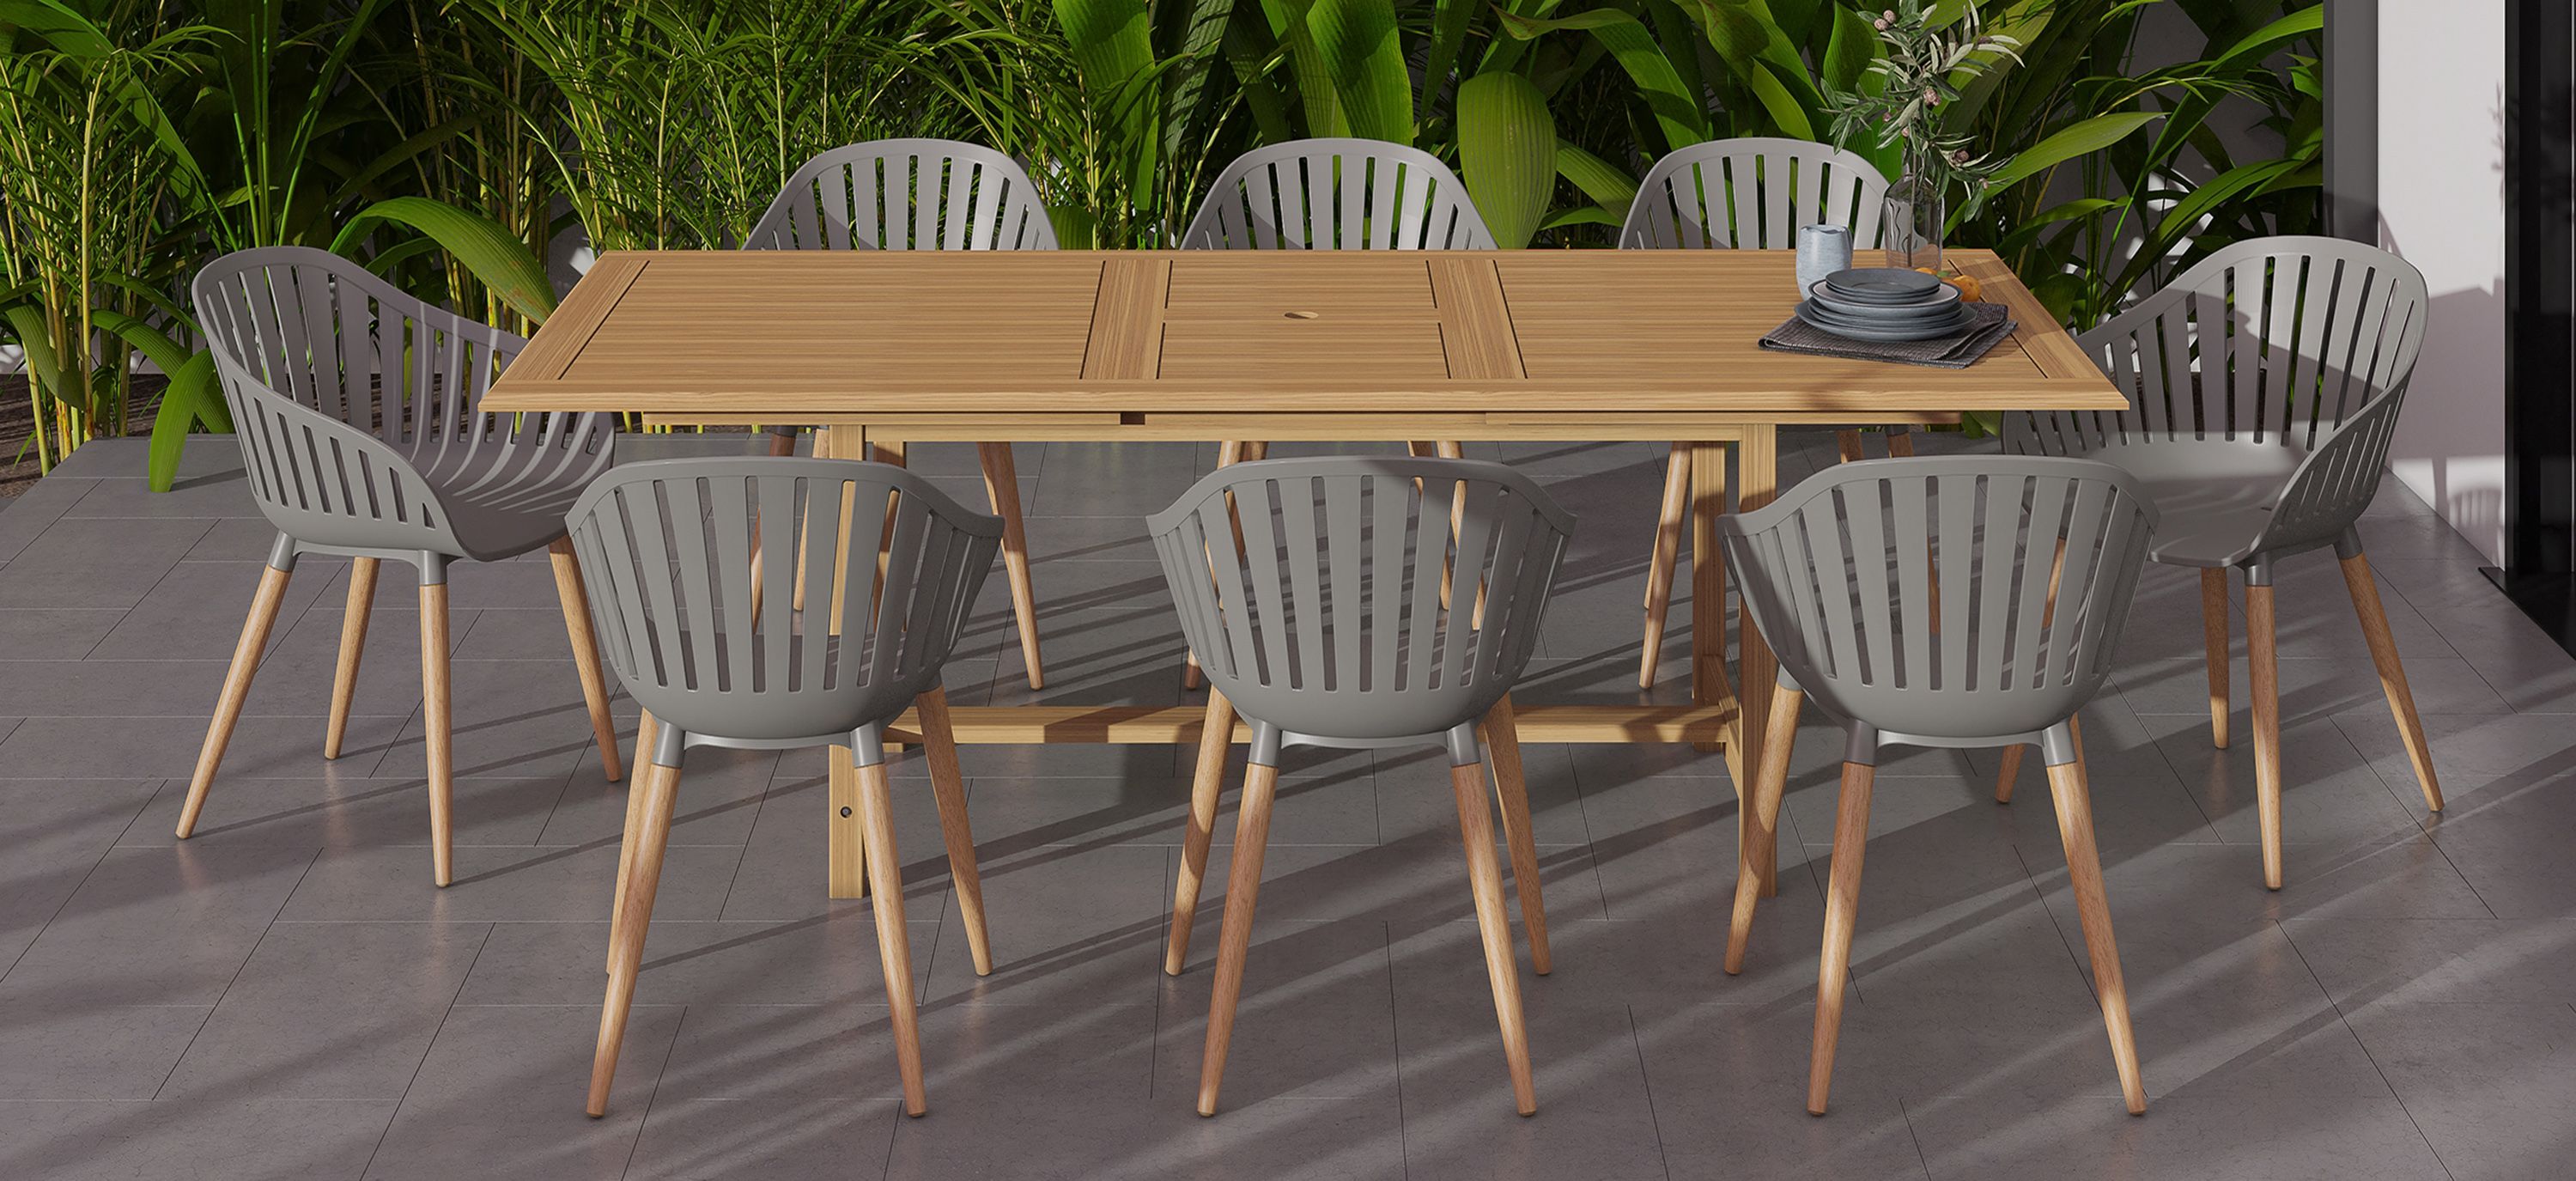 Amazonia Outdoor 9-pc. Rectangular Patio Dining Table Set w/ Eucalyptus Chairs